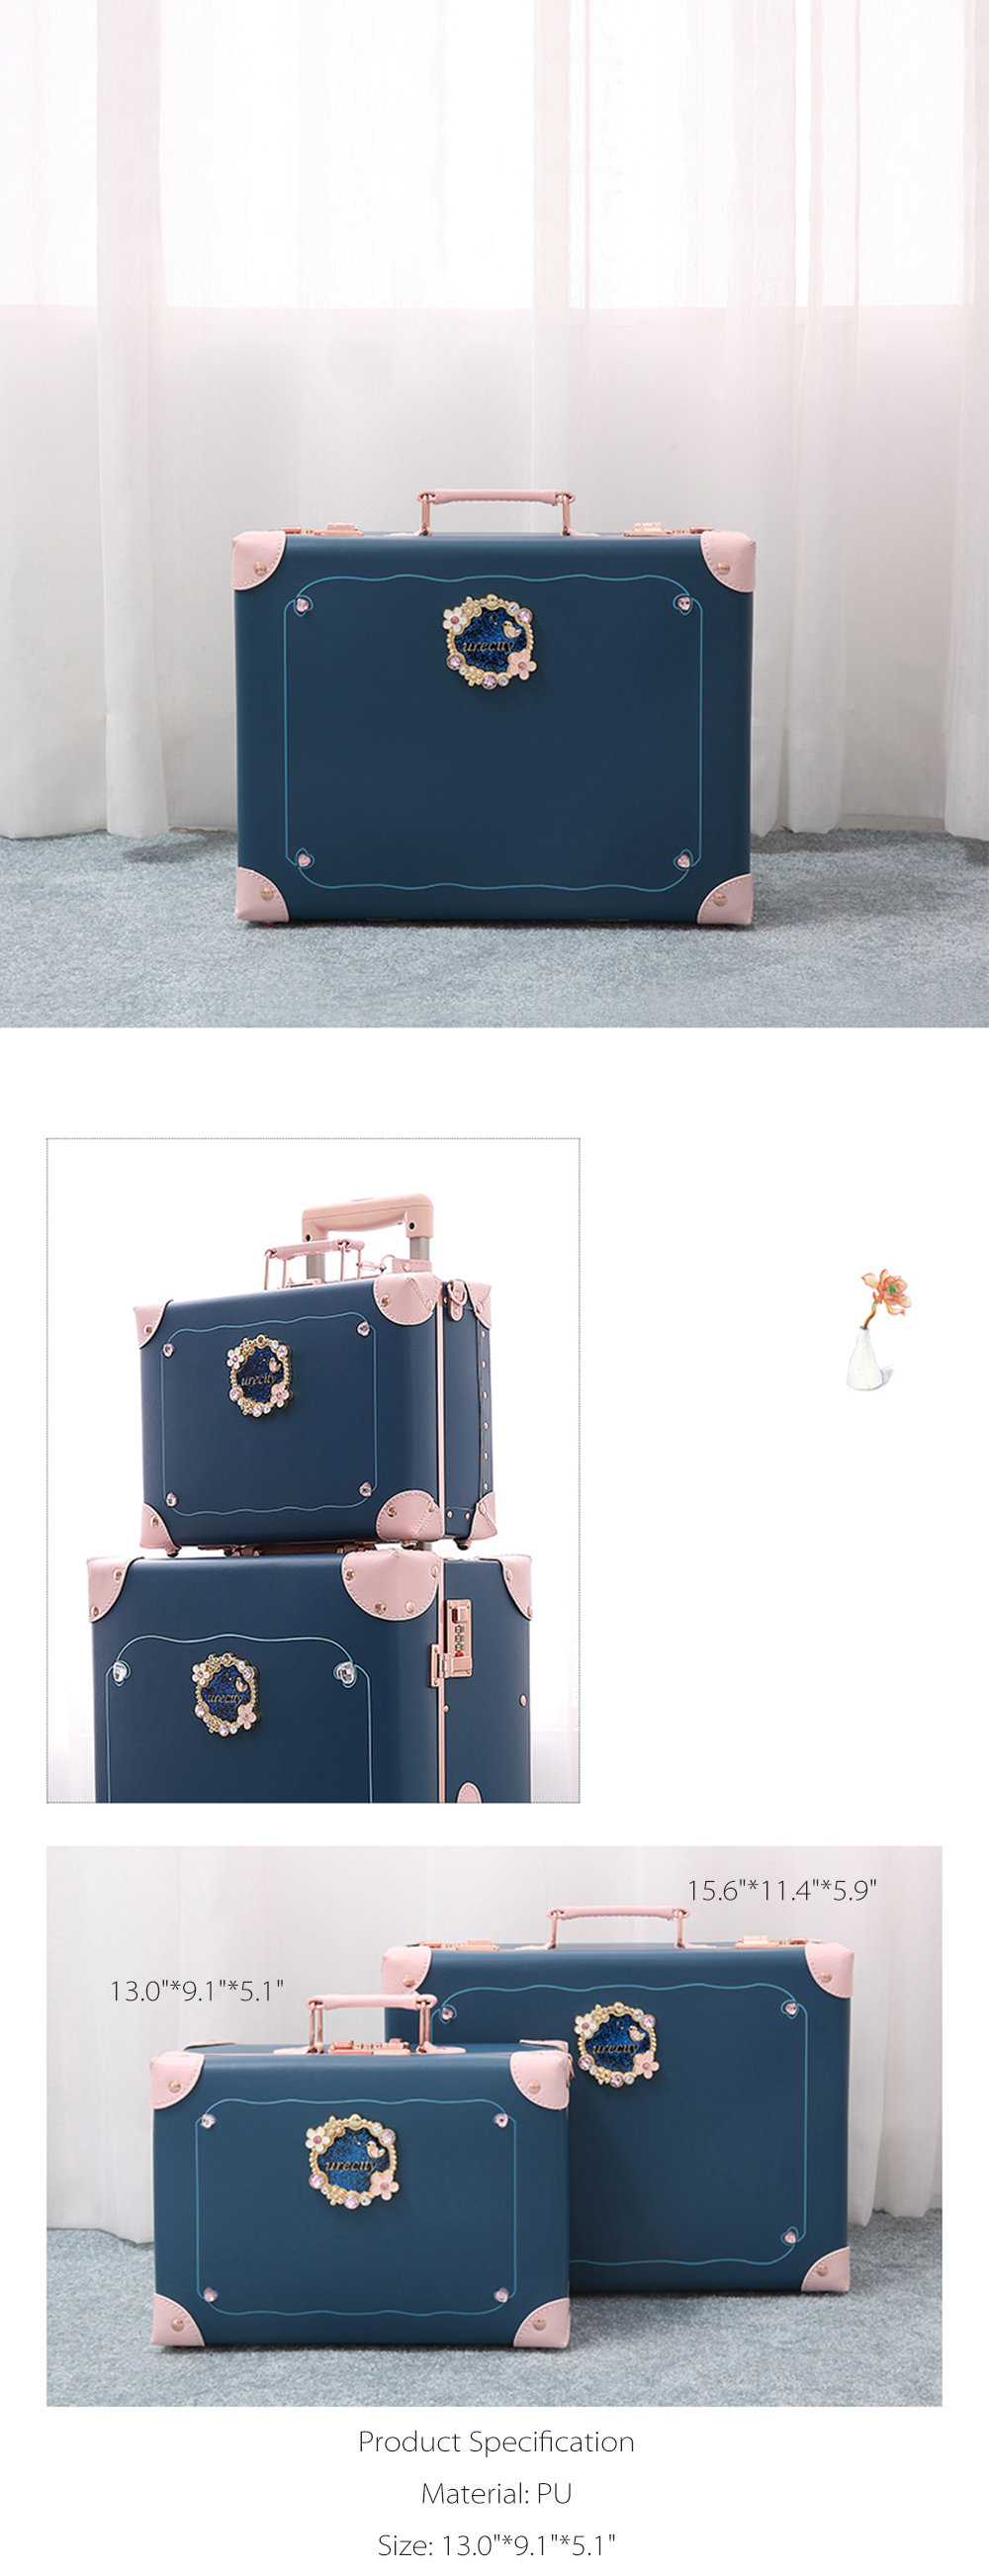 urecity Vintage Suitcase Set for Women, Vintage Luggage Sets for Women 2 Piece, Cute Designer Trunk Luggage, Retro Suit Case (Rose White, 20+12)